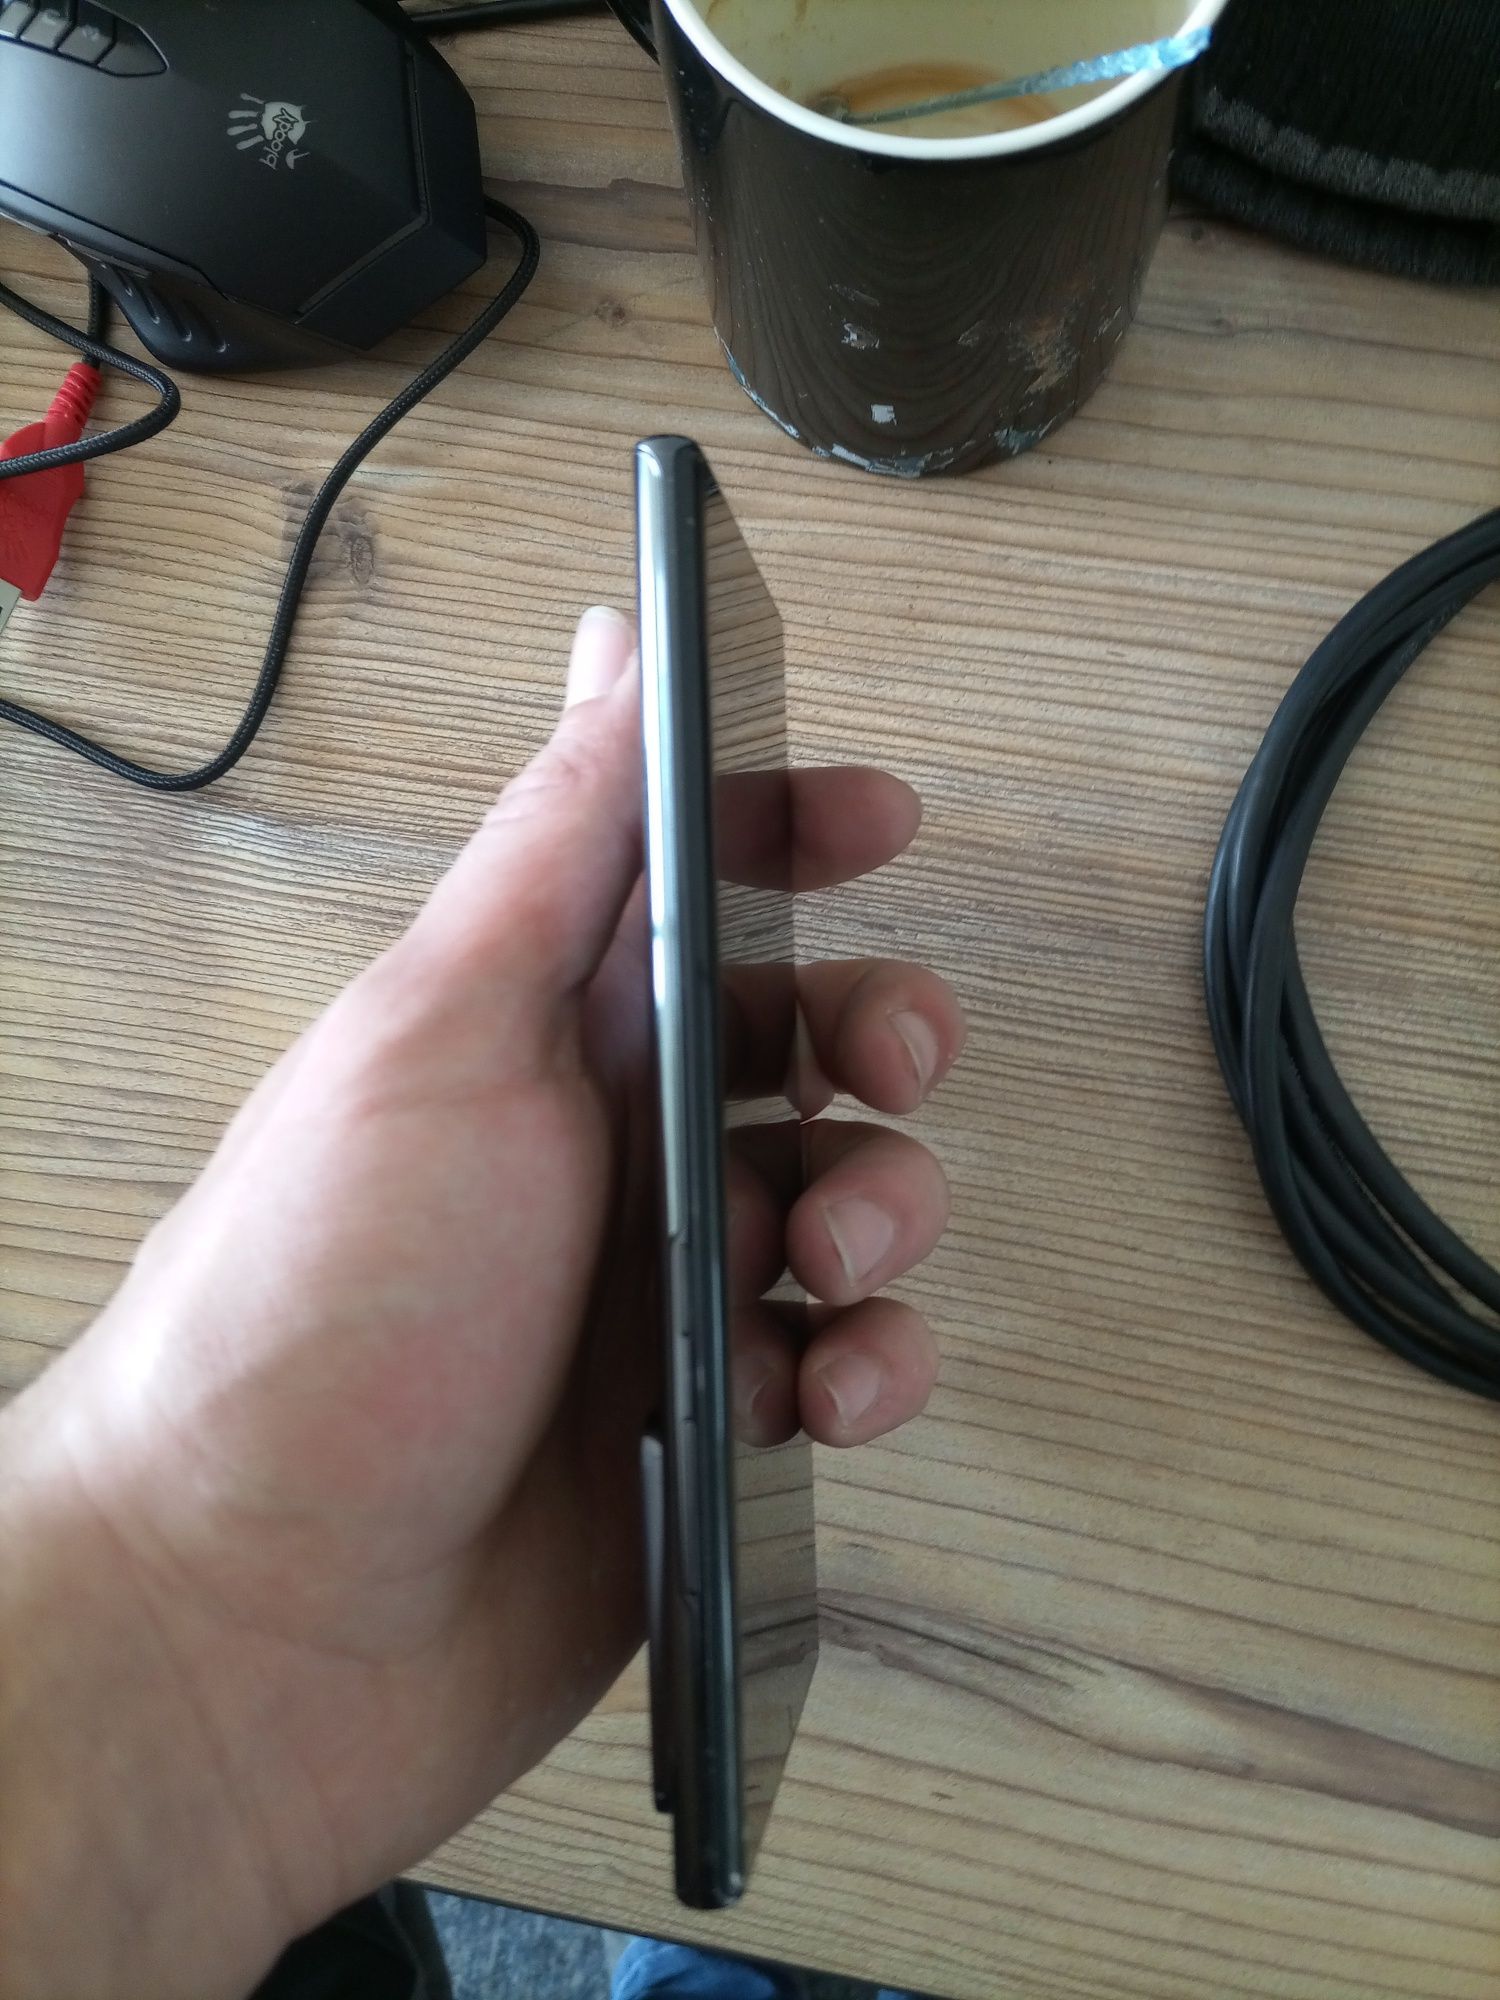 Samsung Note 20 Ultra 5G 256GB BLACK